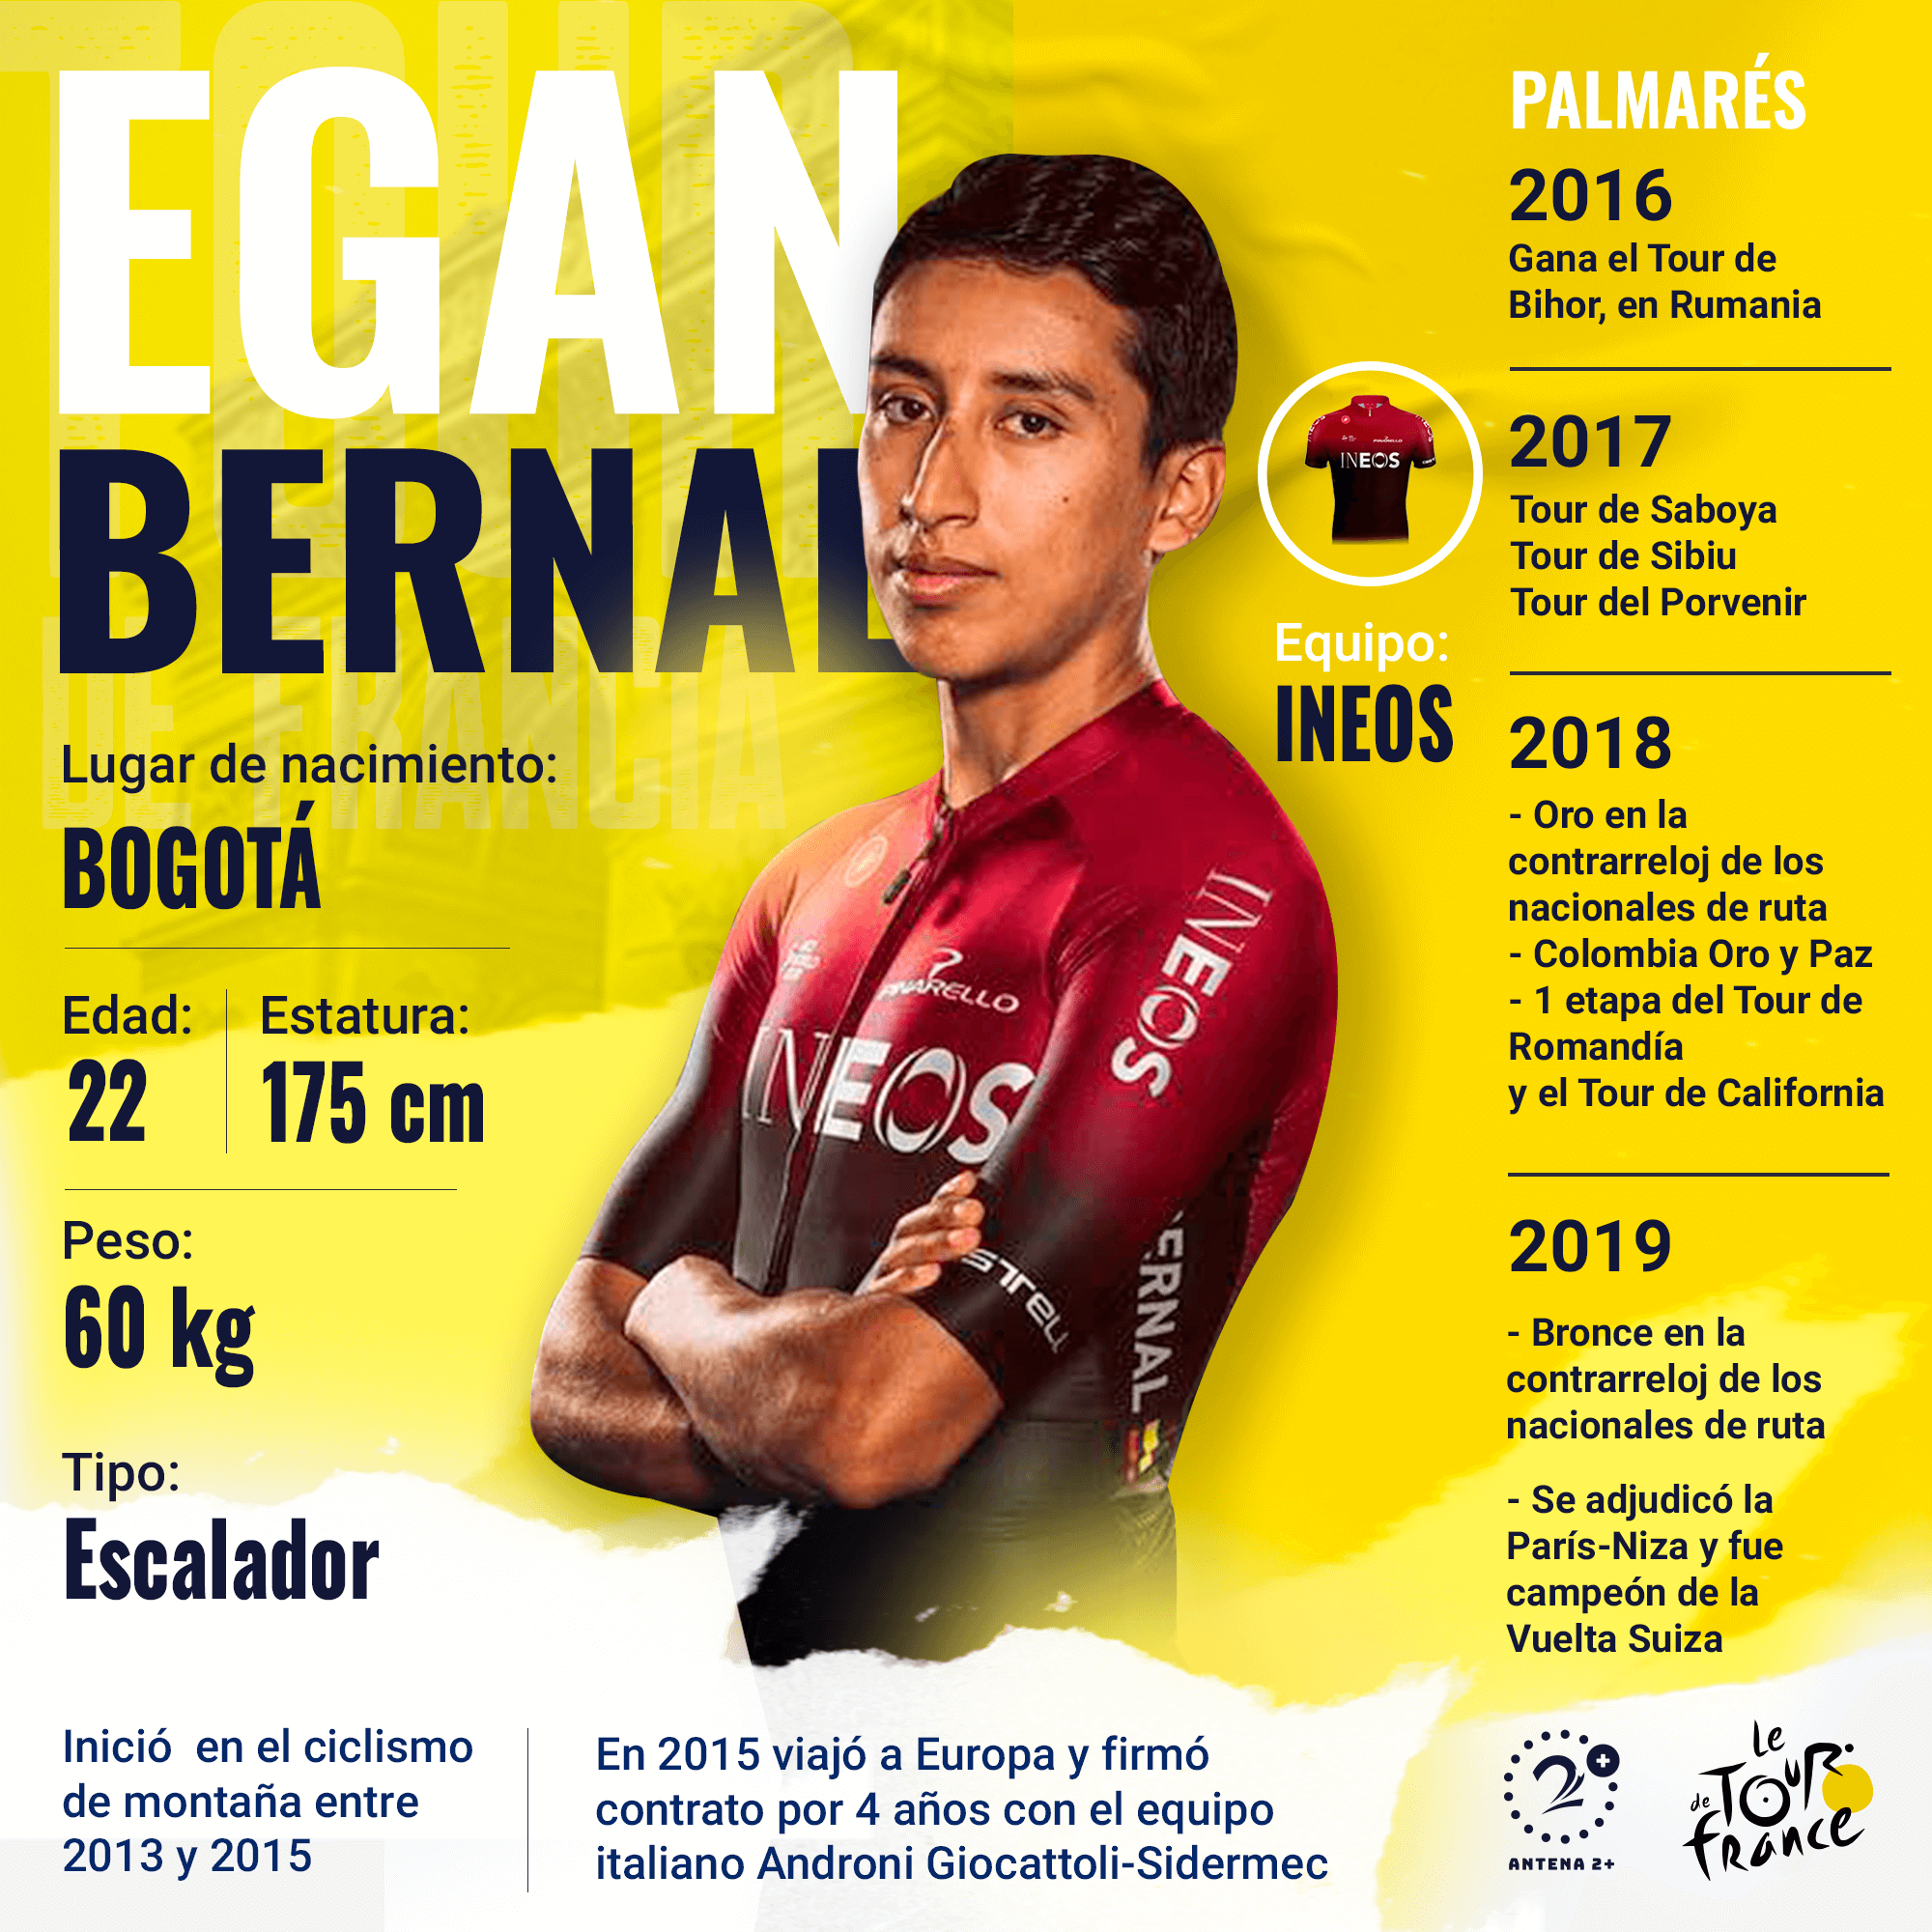 Egan Bernal - Tour de Francia